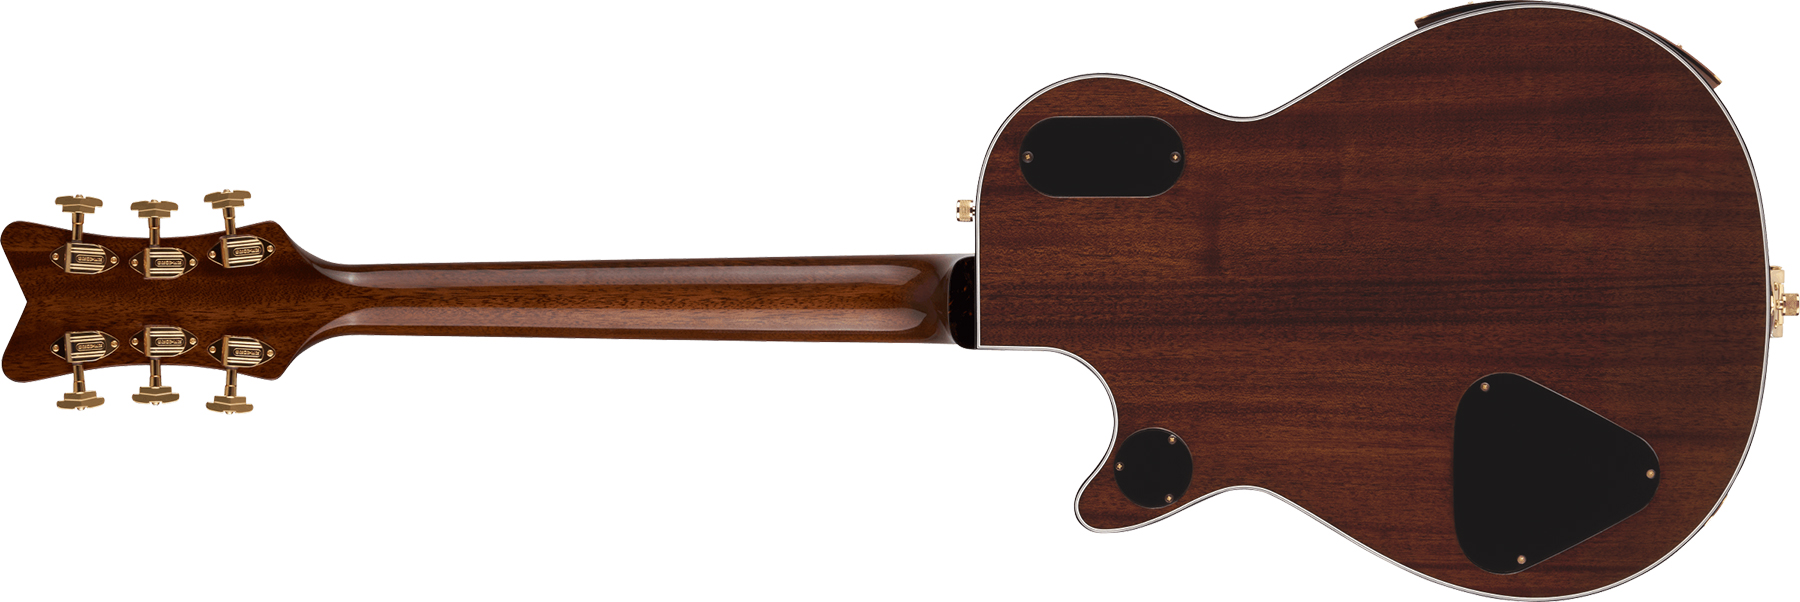 Gretsch G6134t-ltd Penguin Koa Bigsby Pro Jap 2h Trem Eb - Natural - Single-Cut-E-Gitarre - Variation 1